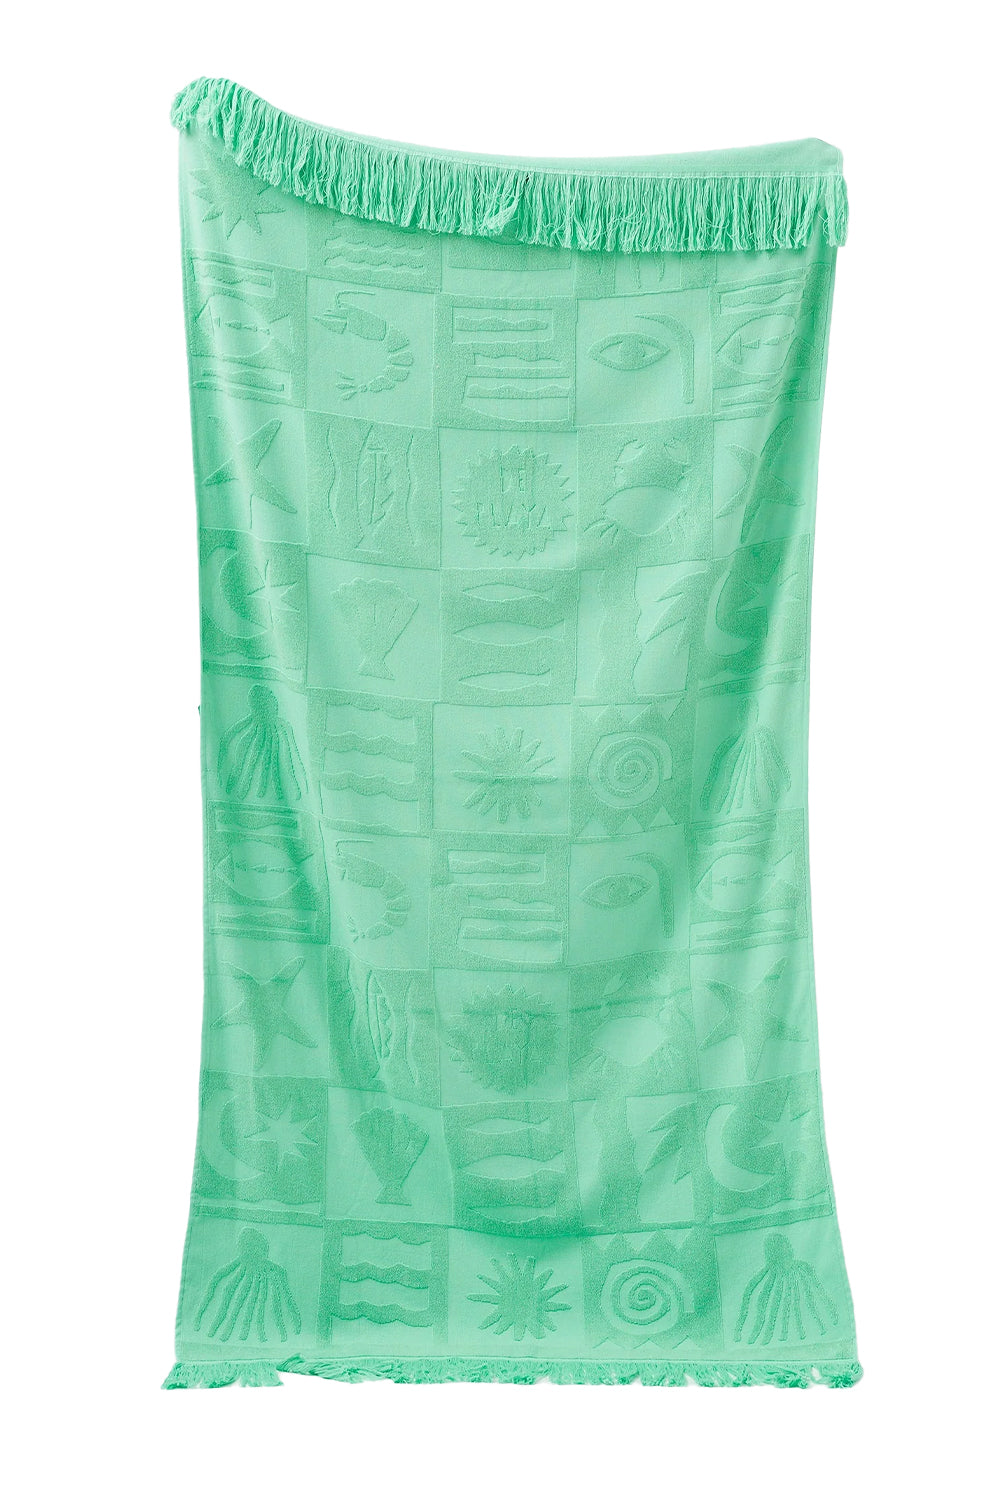 SUNNYLiFE Luxe Towel